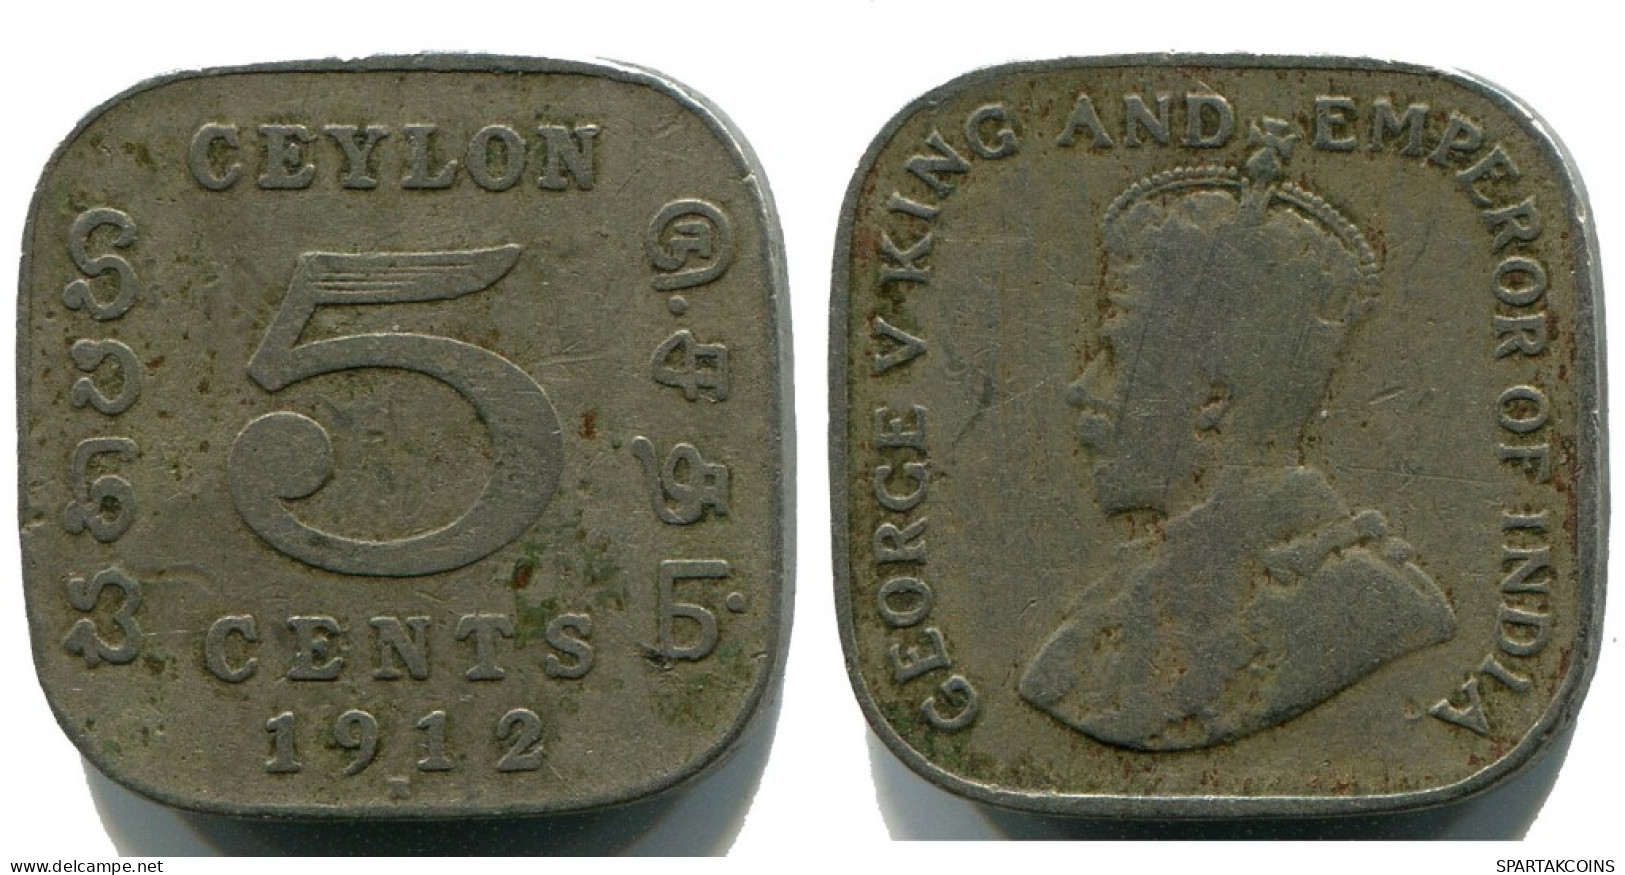 5 CENTS 1912 CEILÁN CEYLON Moneda #AH611.3.E.A - Otros – Asia